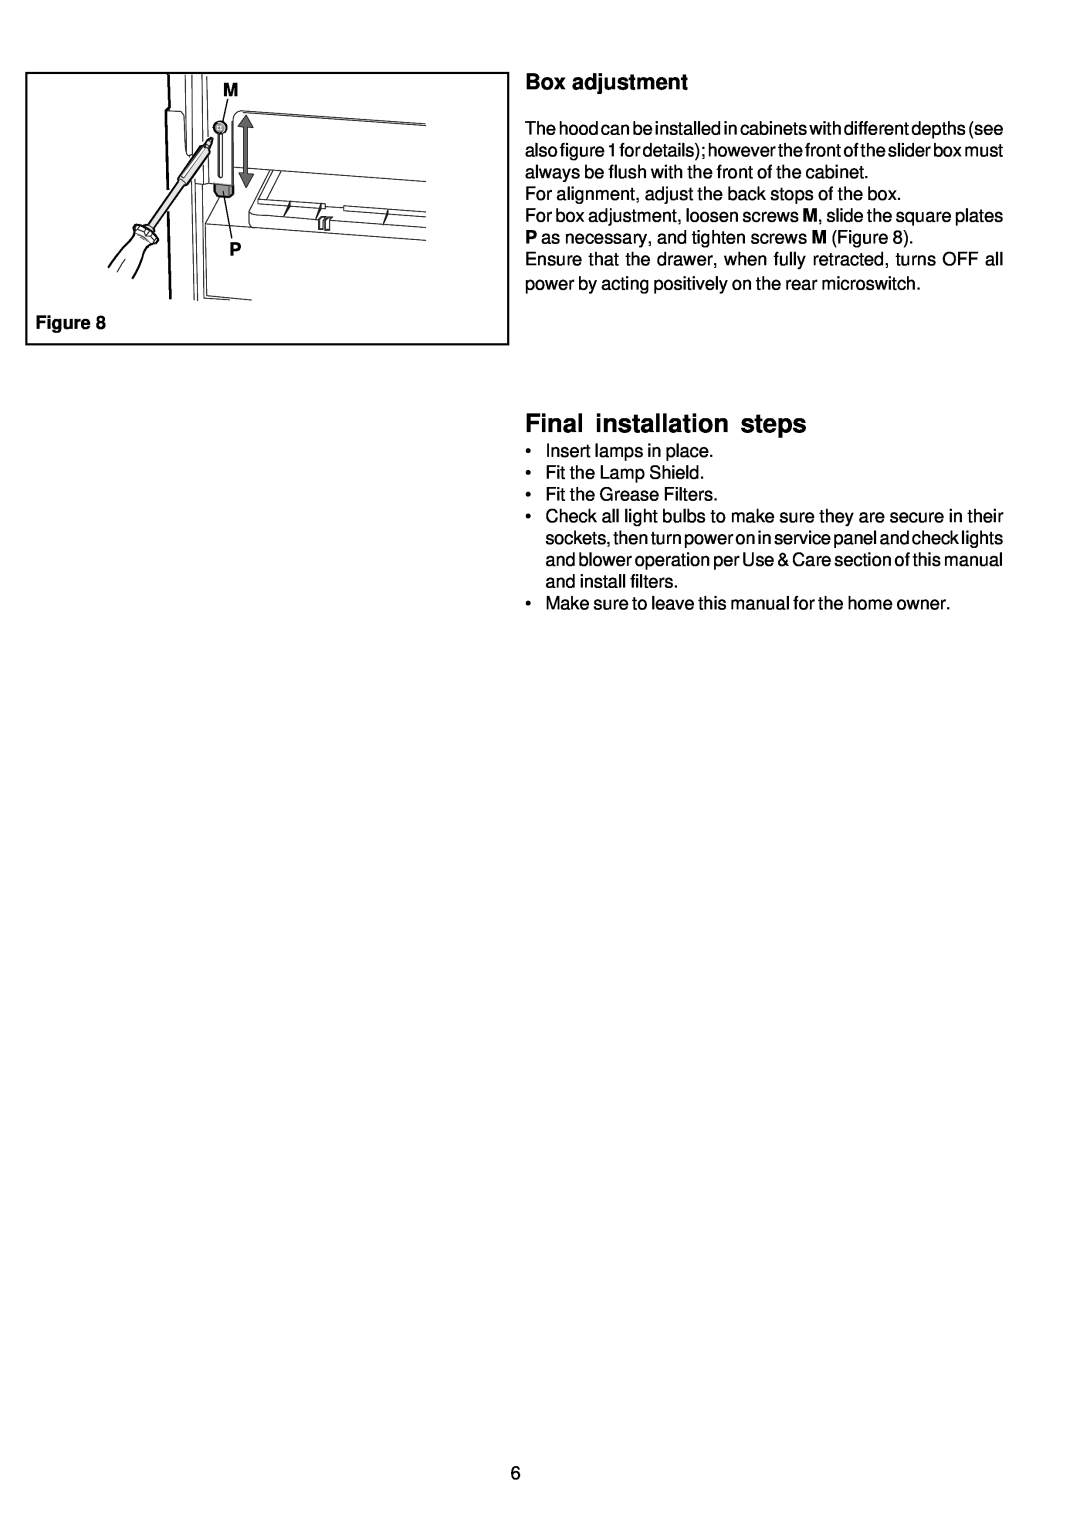 Kenyon B81200 Series manual Final installation steps, Box adjustment 